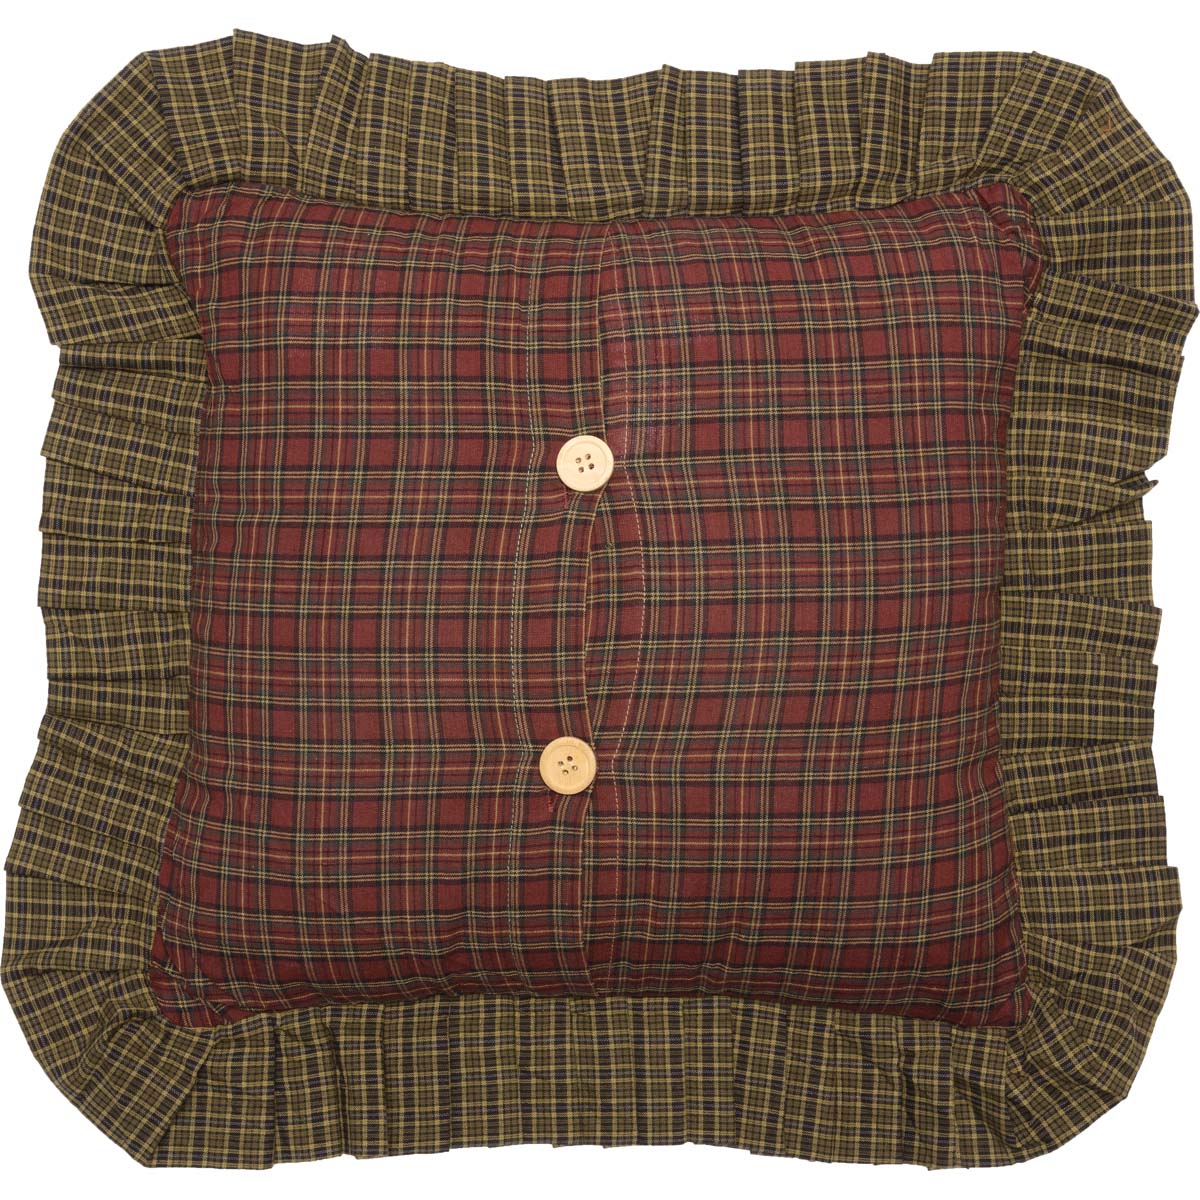 Oak & Asher Tea Cabin Pillow Cover Fabric Ruffled 16x16 By VHC Brands